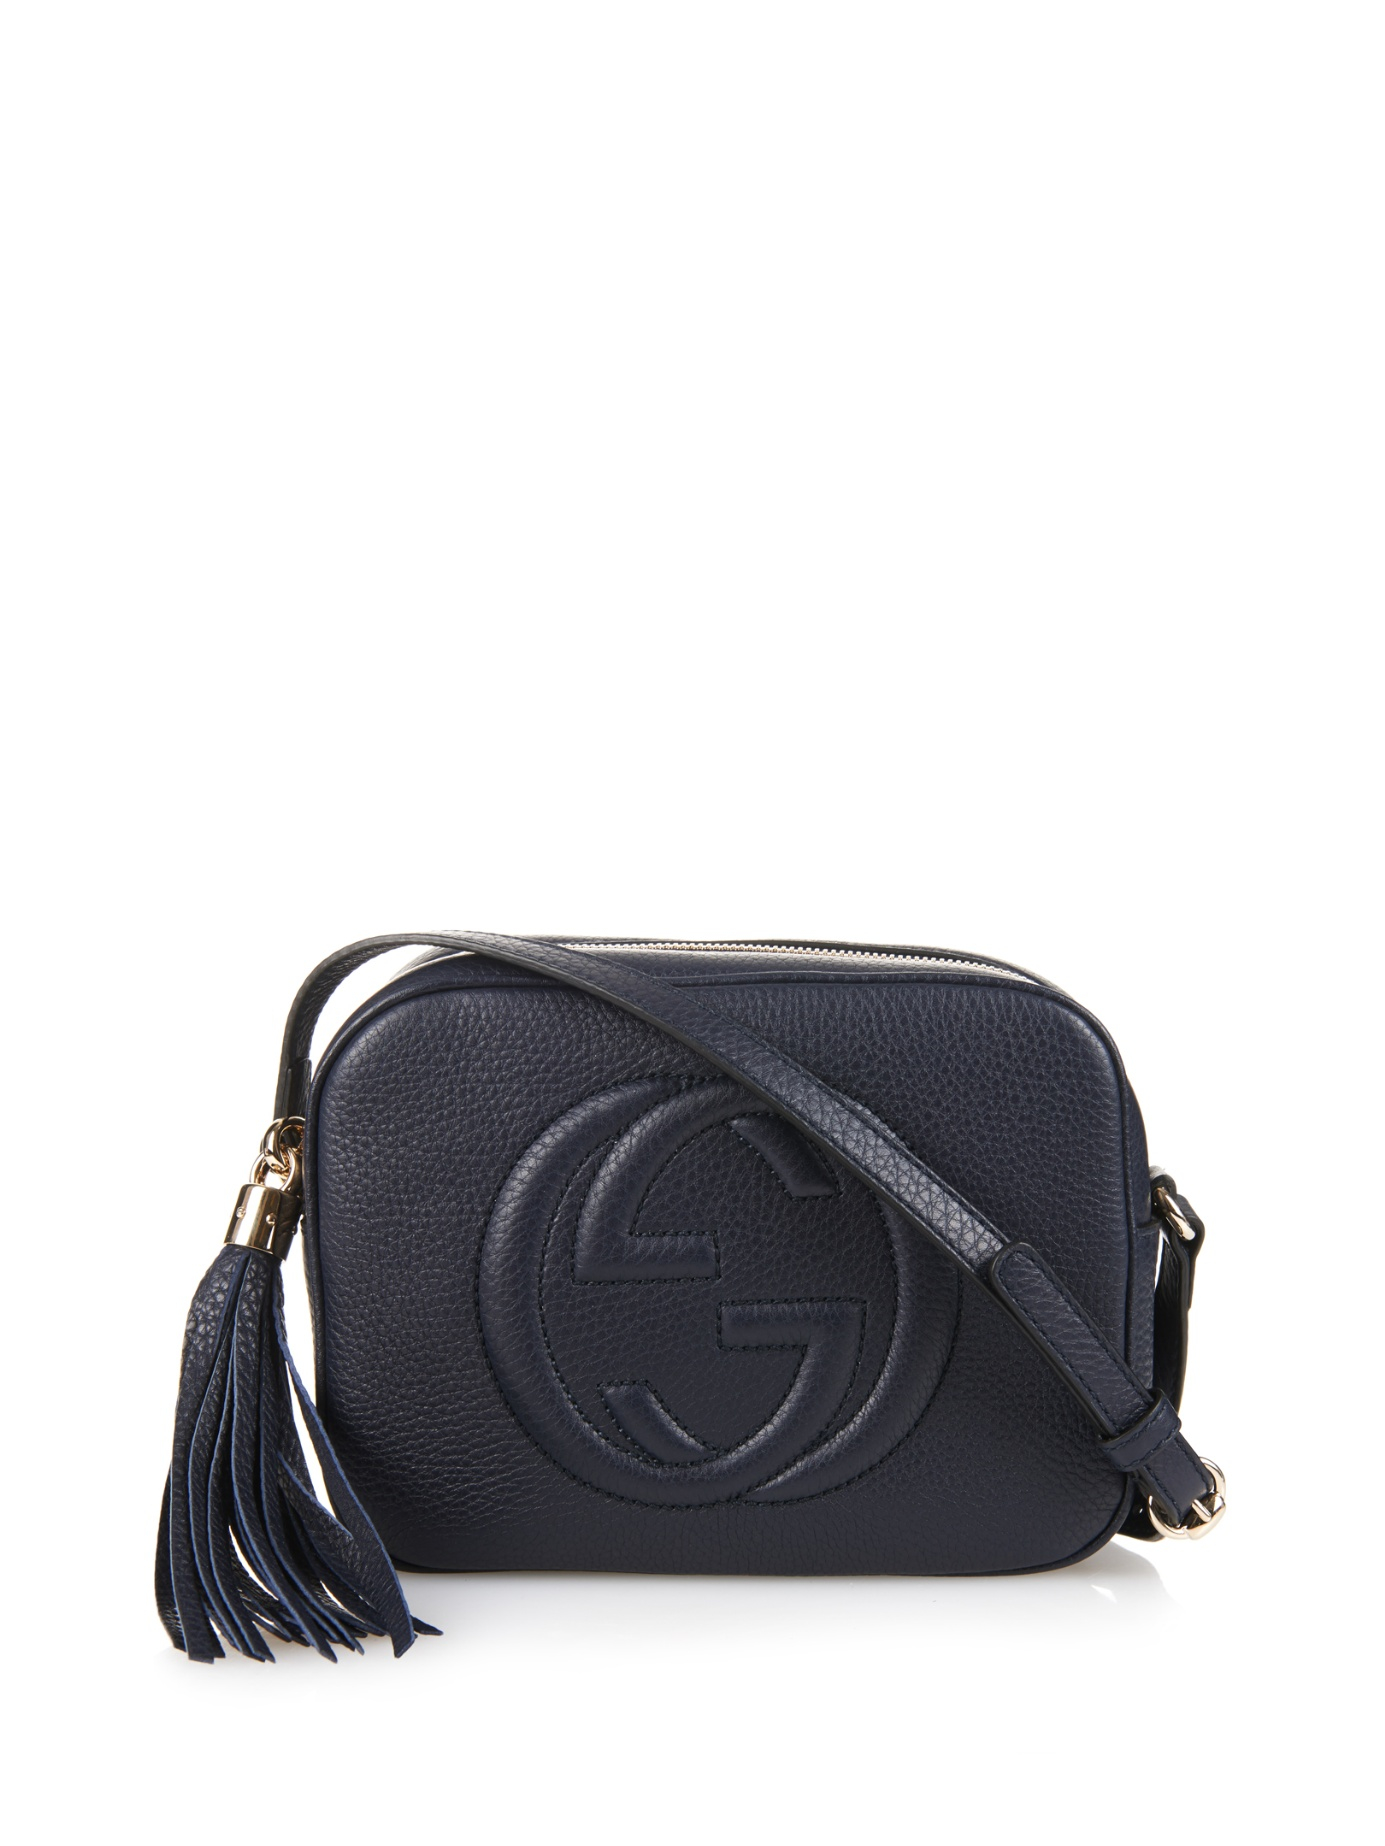 Gucci Soho Leather Cross-body Bag in Black - Lyst